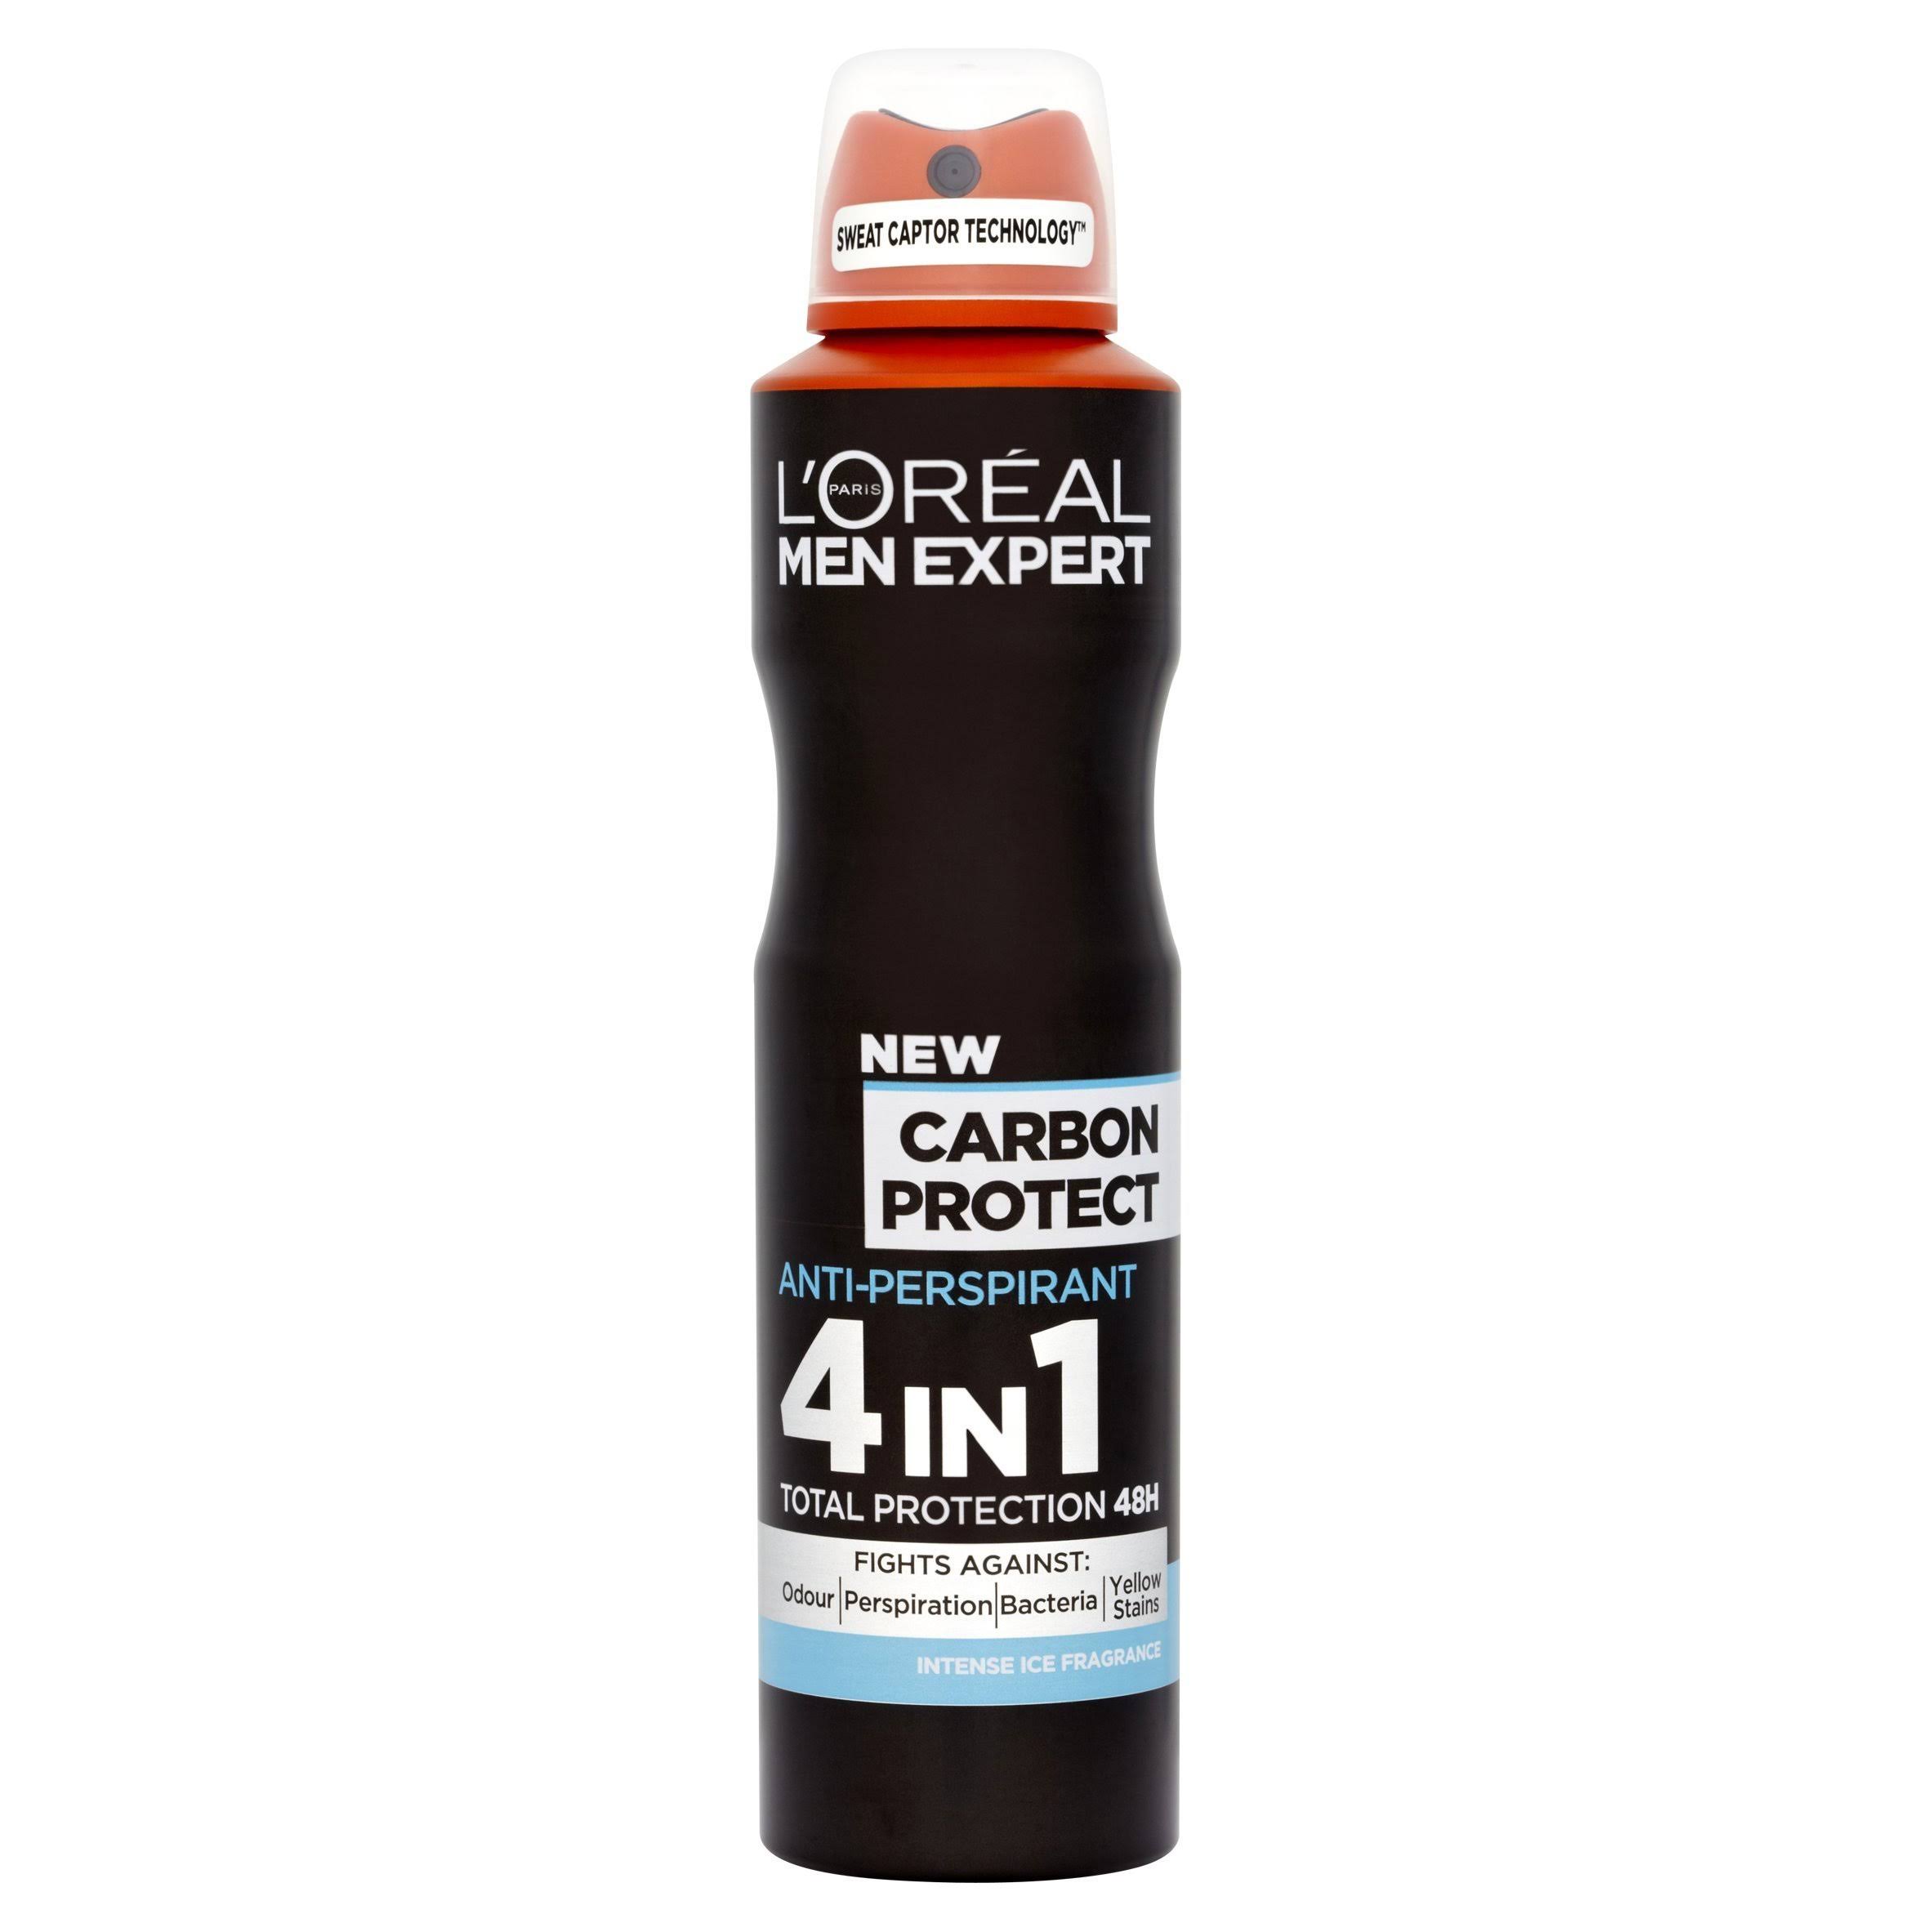 L'Oreal Men Expert Carbon Protect Deodorant - 250ml, Intense Ice Fragrance